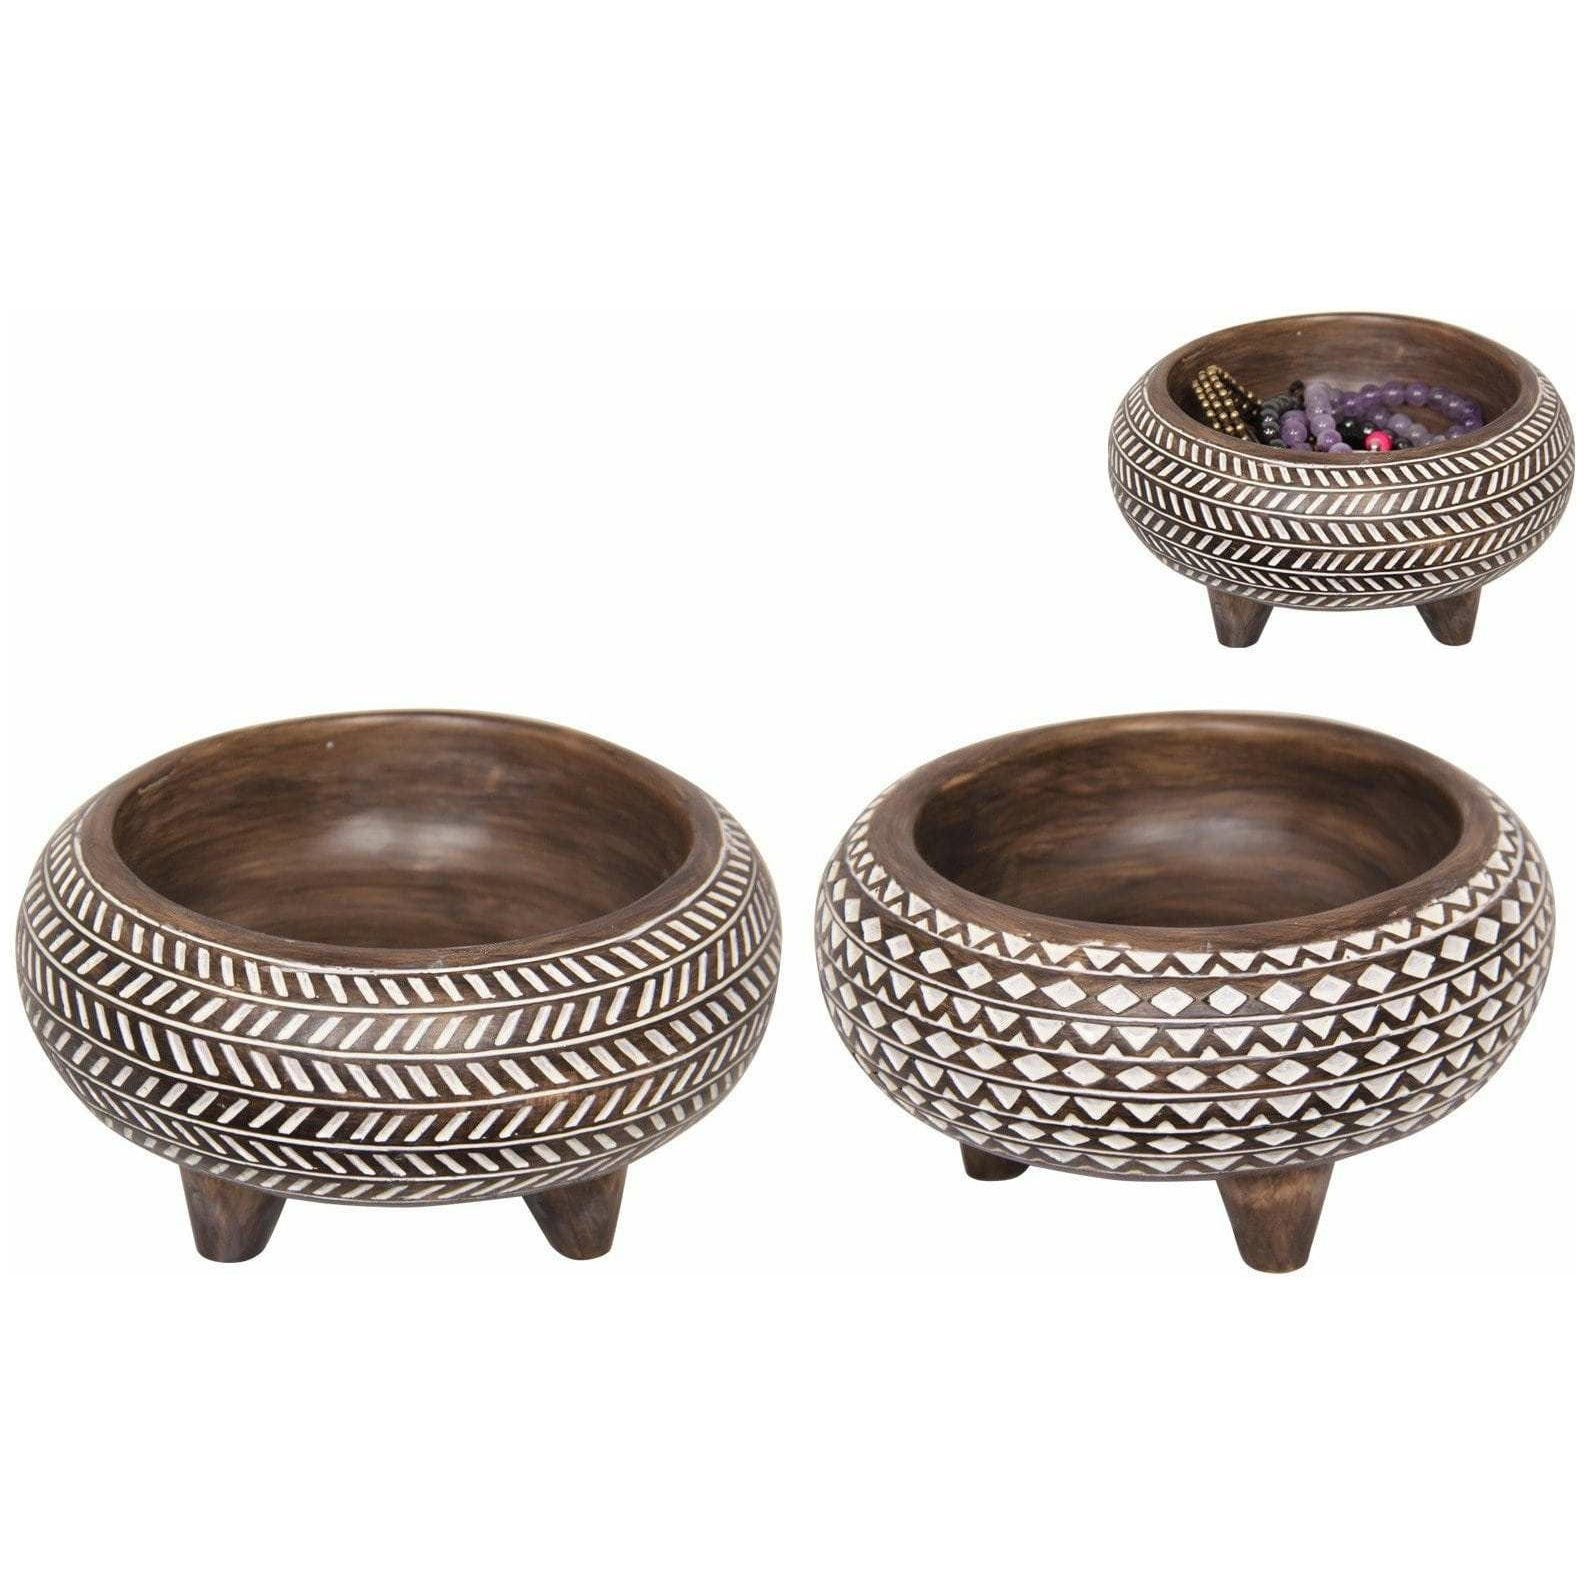 Boho Tribal African Art Decor Bowl 15cm Assorted Designs 1pce - Dollars and Sense